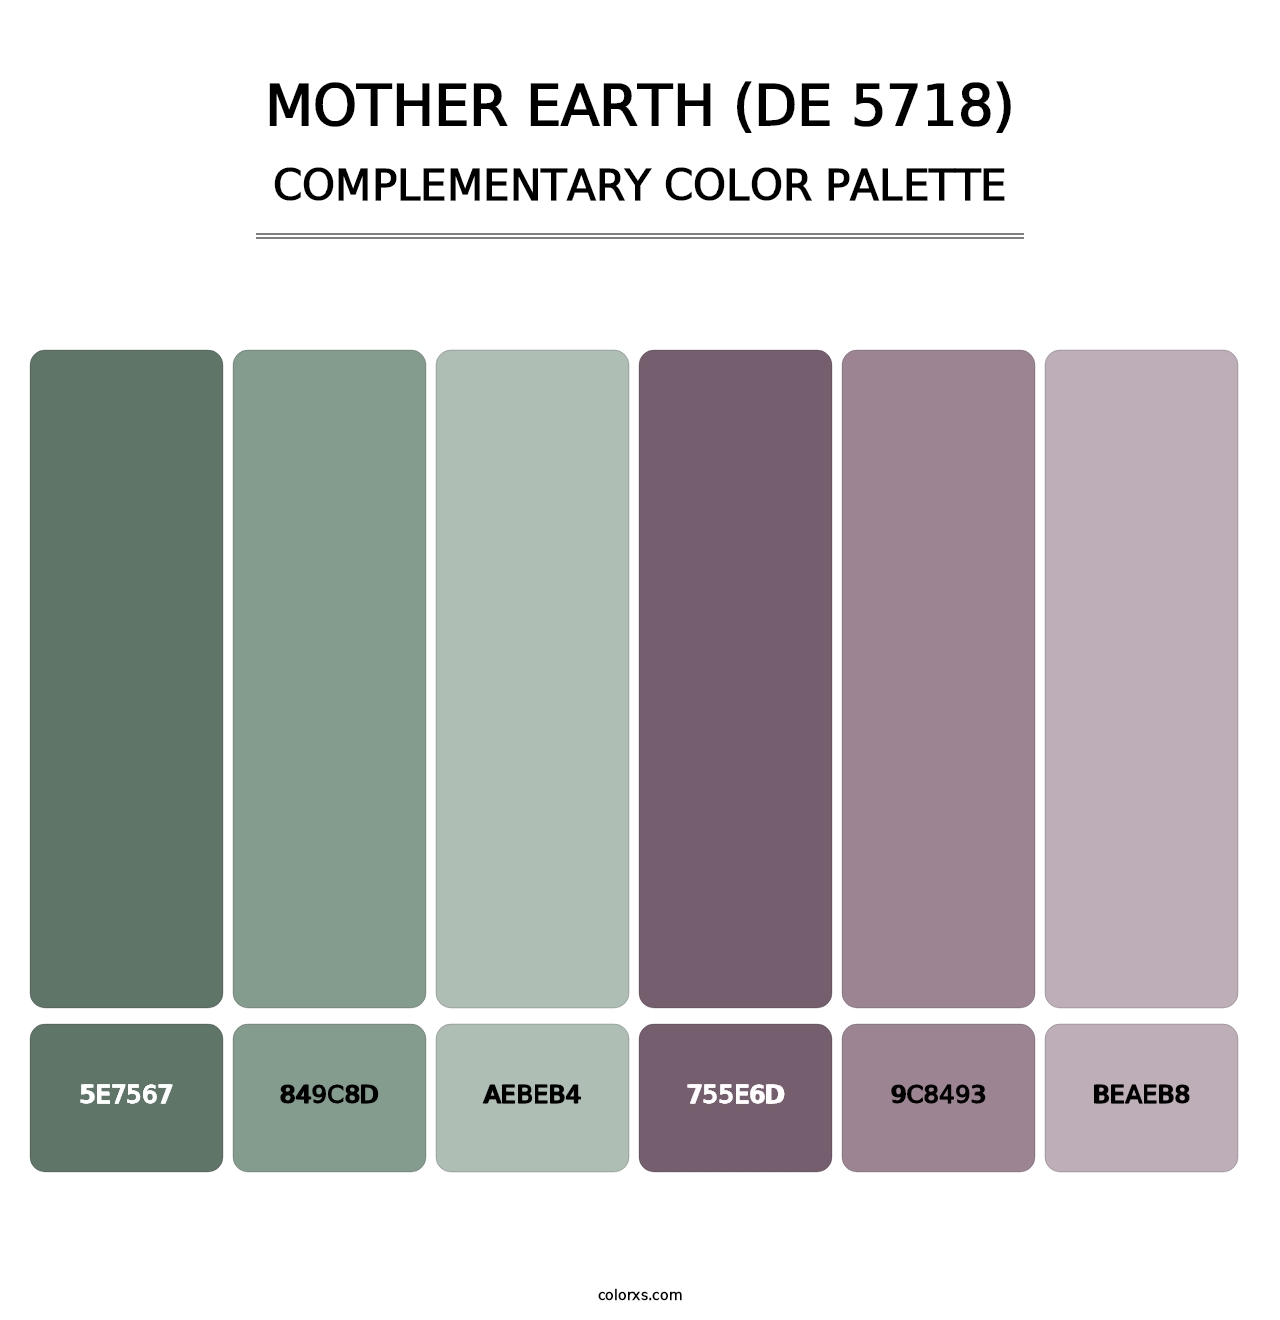 Mother Earth (DE 5718) - Complementary Color Palette